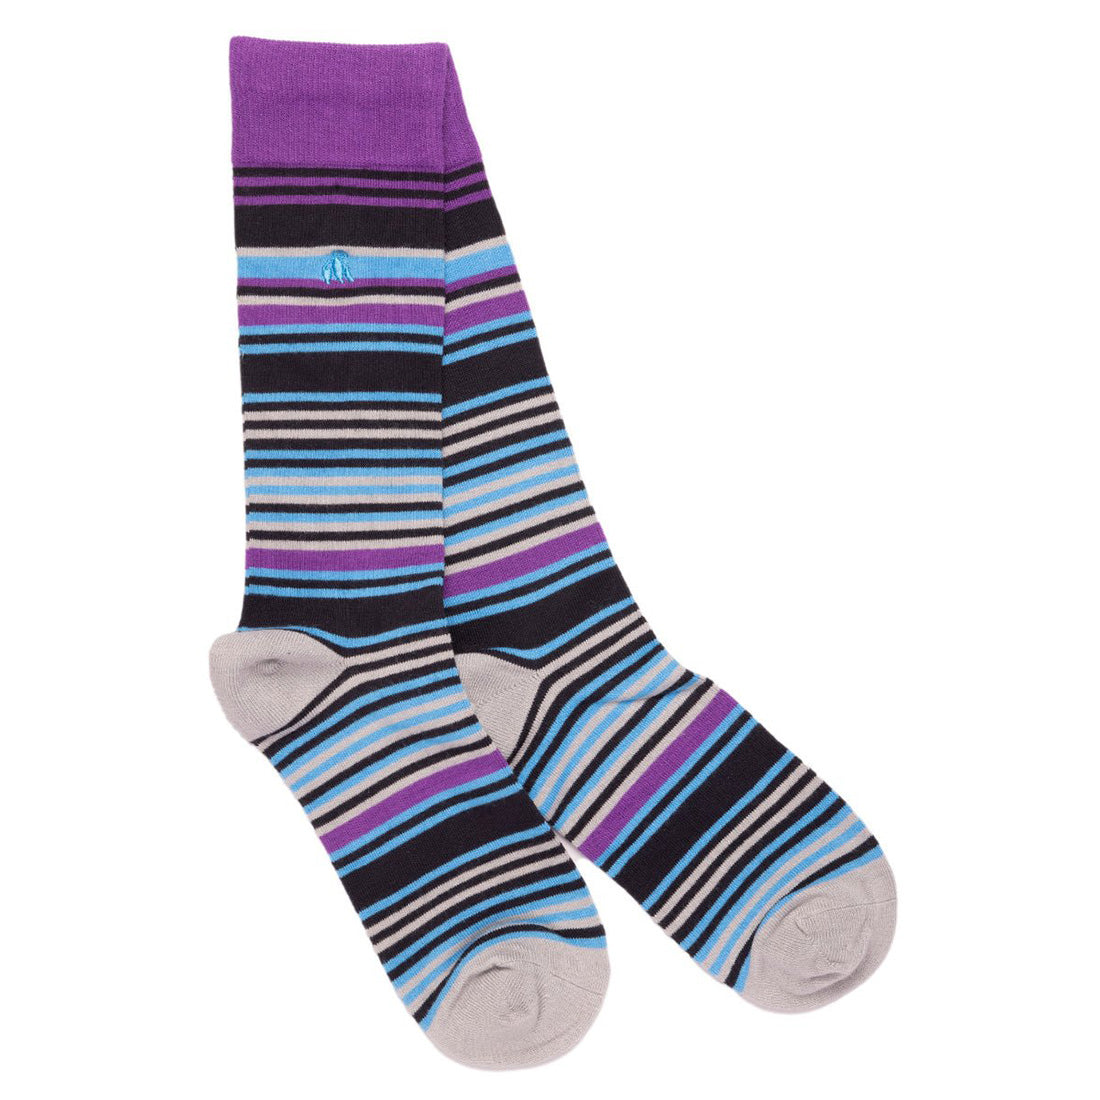 socks-purple-and-blue-striped-bamboo-socks-1_122b71ac-73df-478a-8cd4-0deff2babe29.jpg